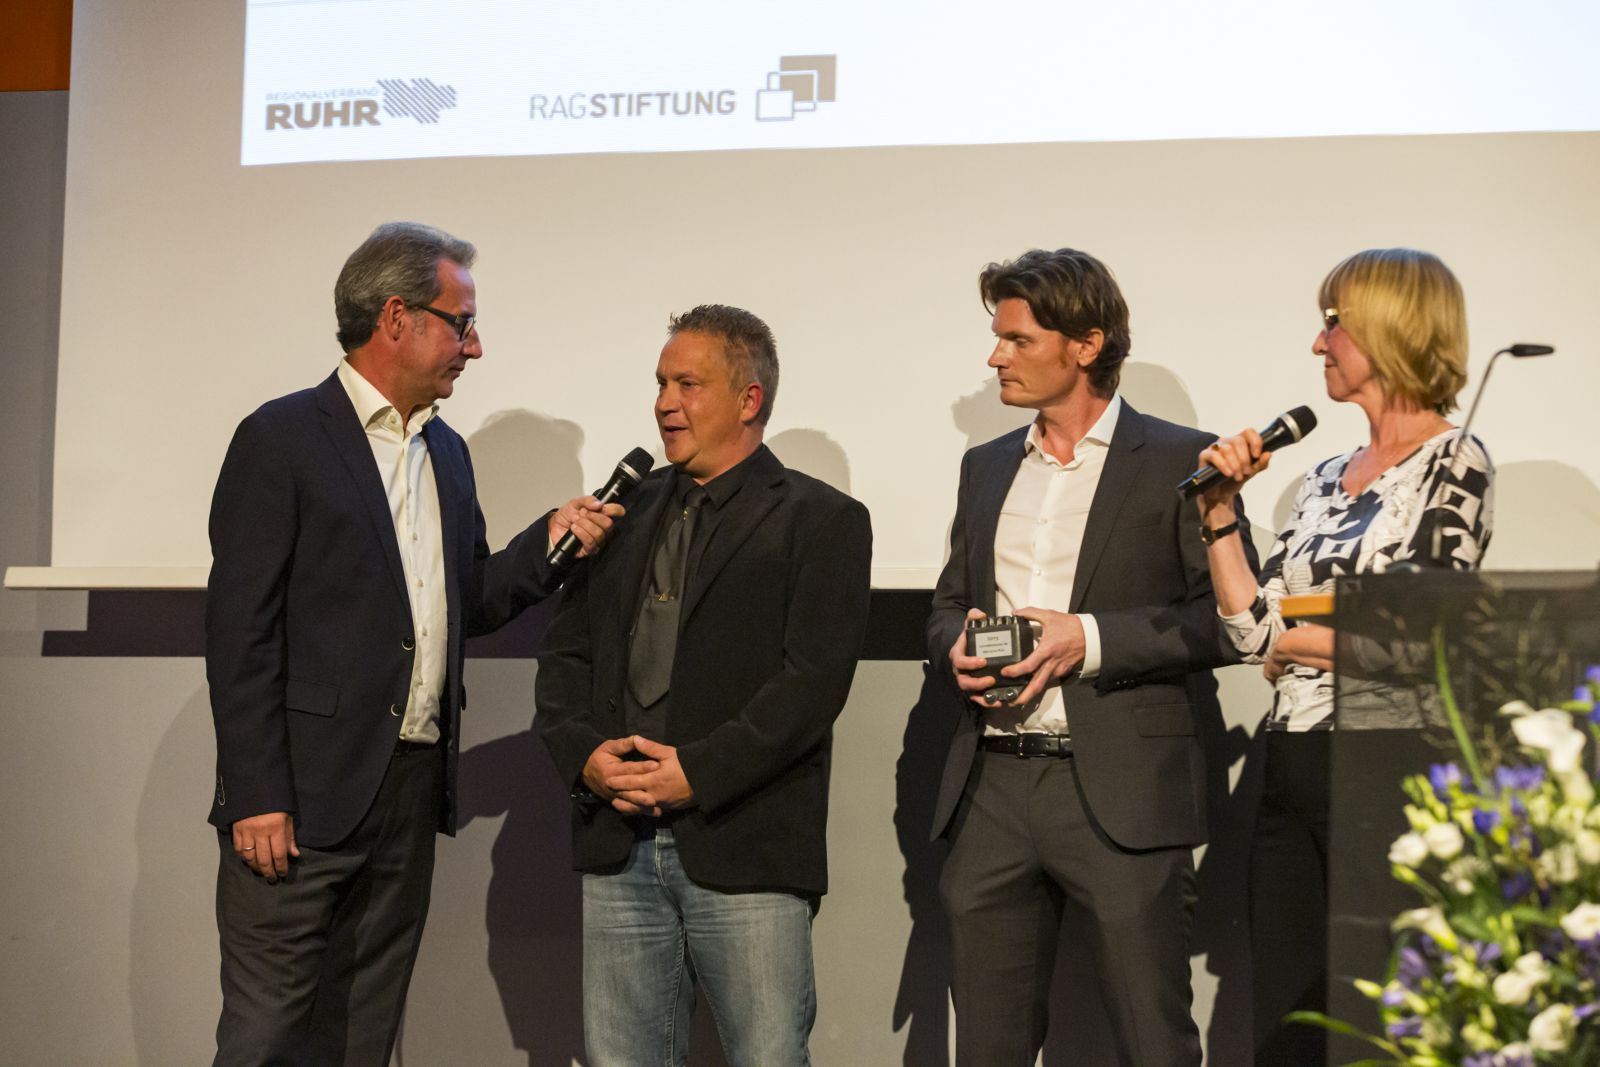 Preisverleihung lorry - Journalistenpreis Metropole Ruhr, 2019